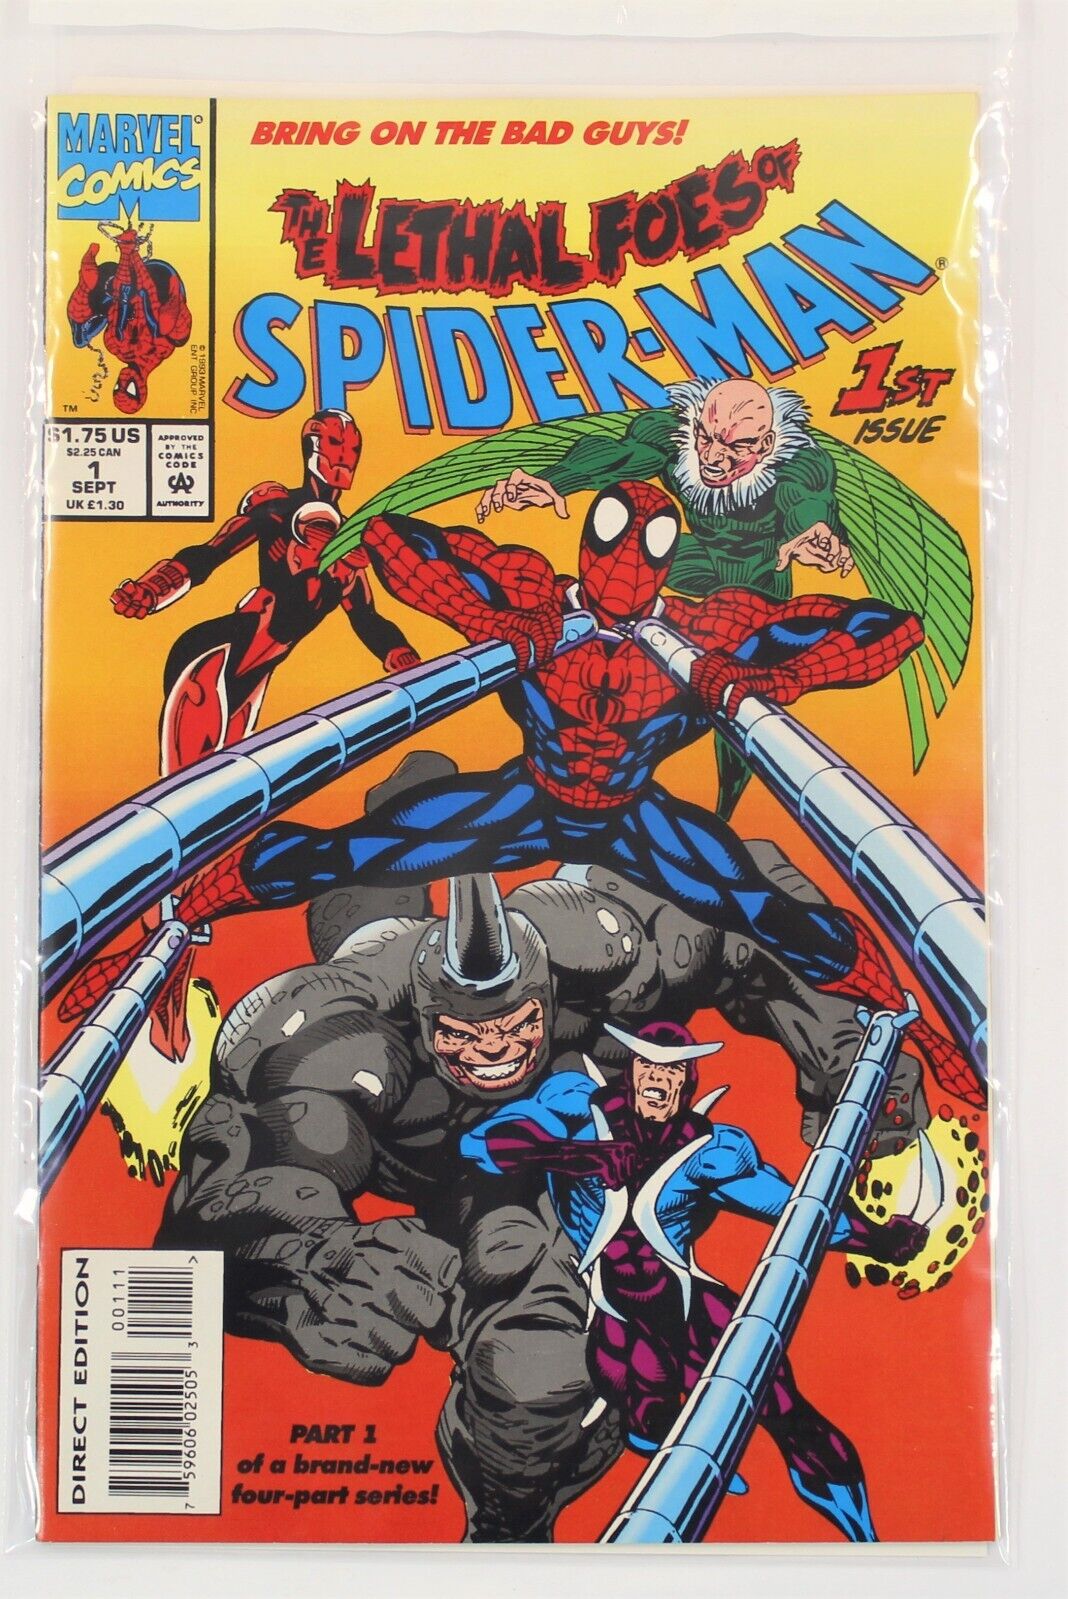 Marvel Comics, The Lethal Foes Of Spider-Man Vol. 1 No. 1 Sept 1993